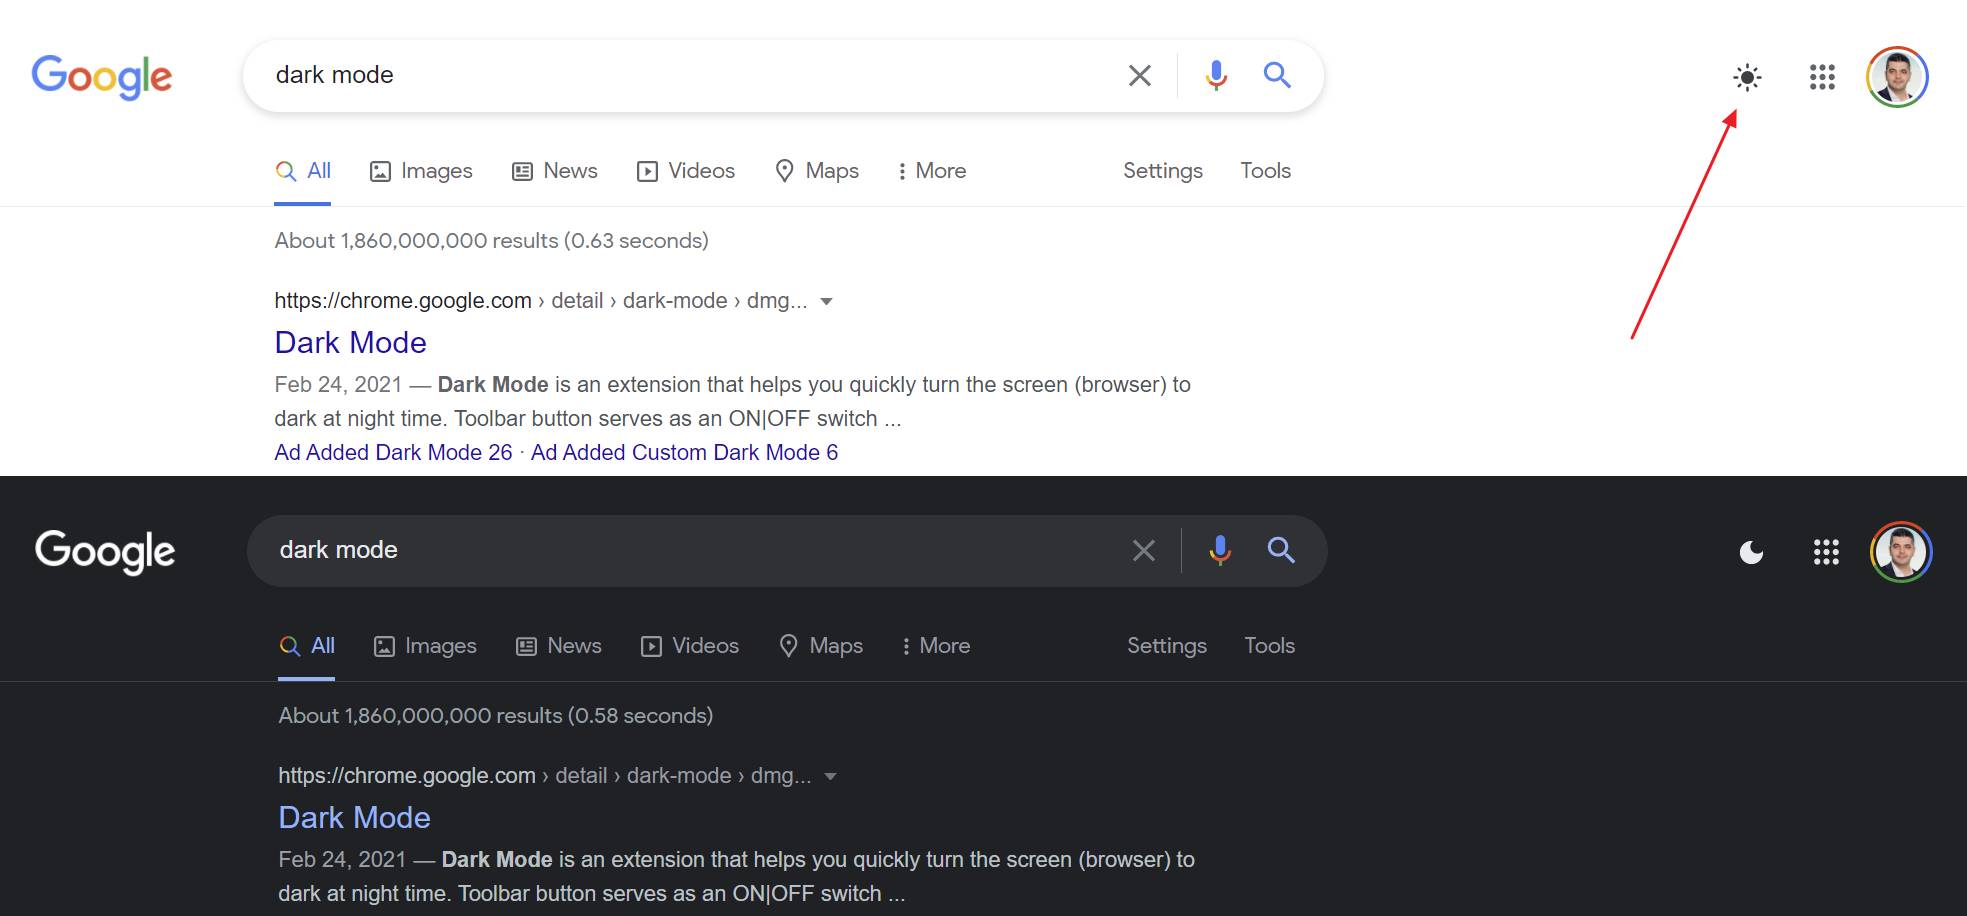 Google Search desktop dark mode light theme - BinaryFork.com